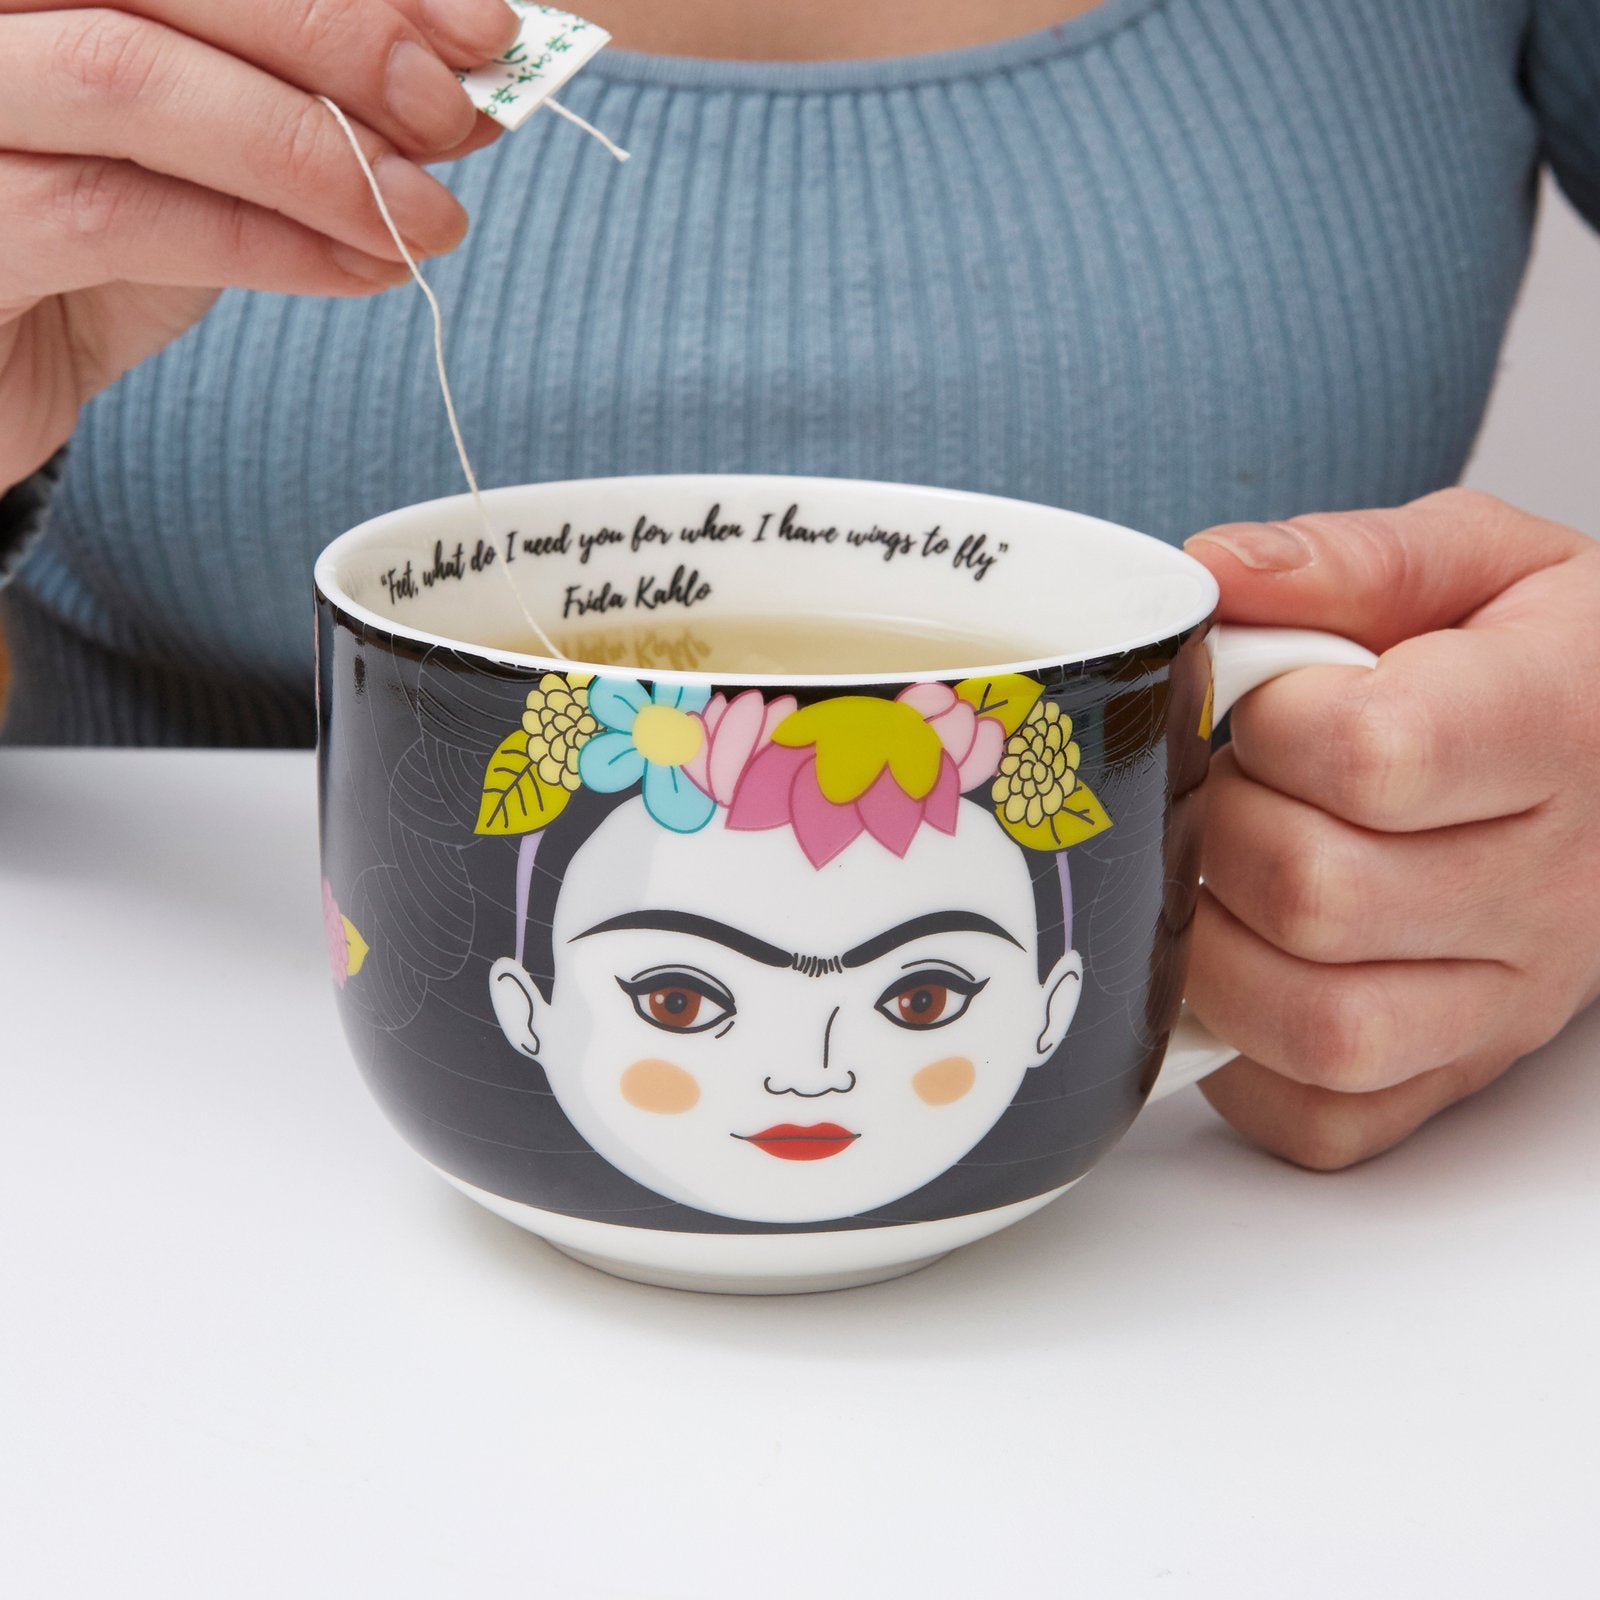 Frida Kahlo Mug